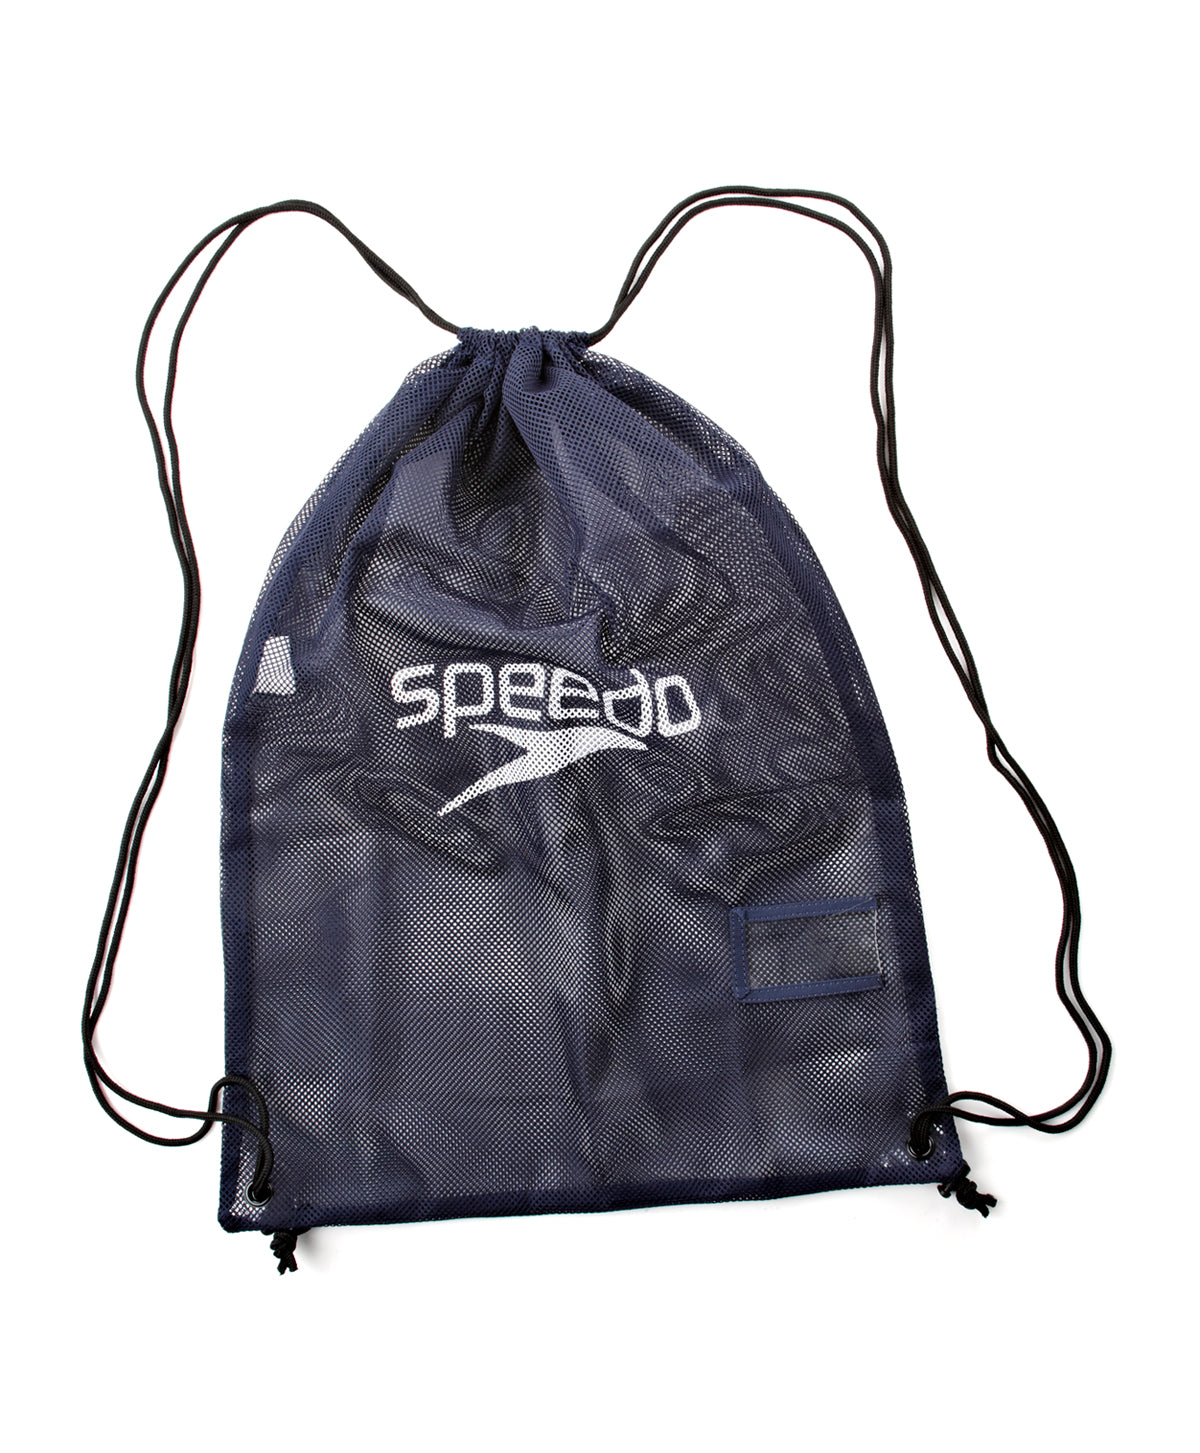 SPEEDO Equipment Mesh Bag